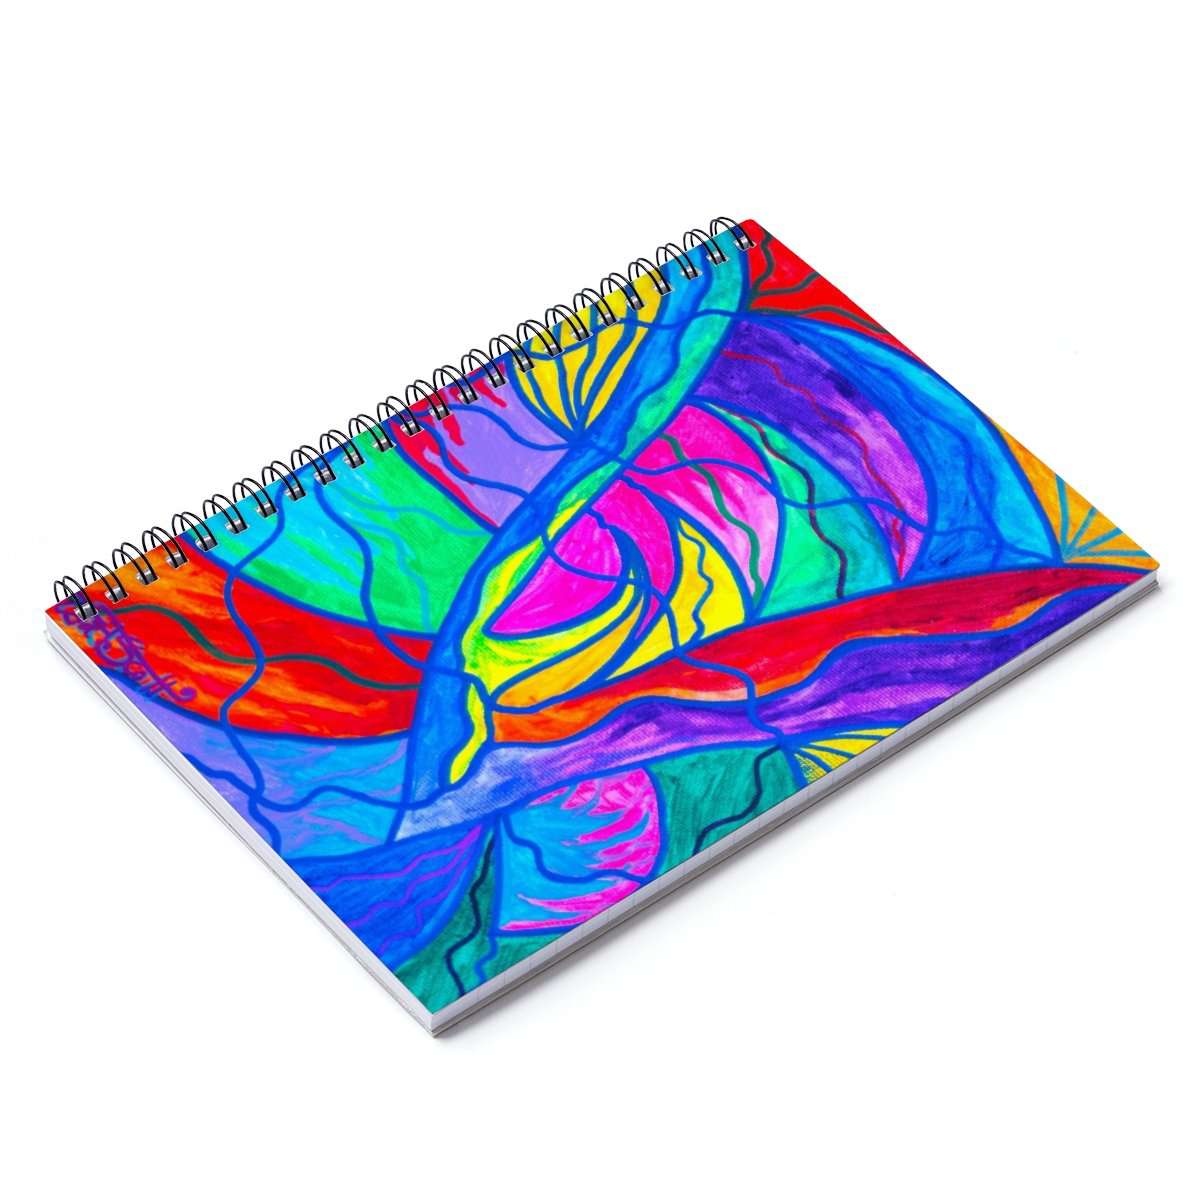 Drastic Change - Spiral Notebook